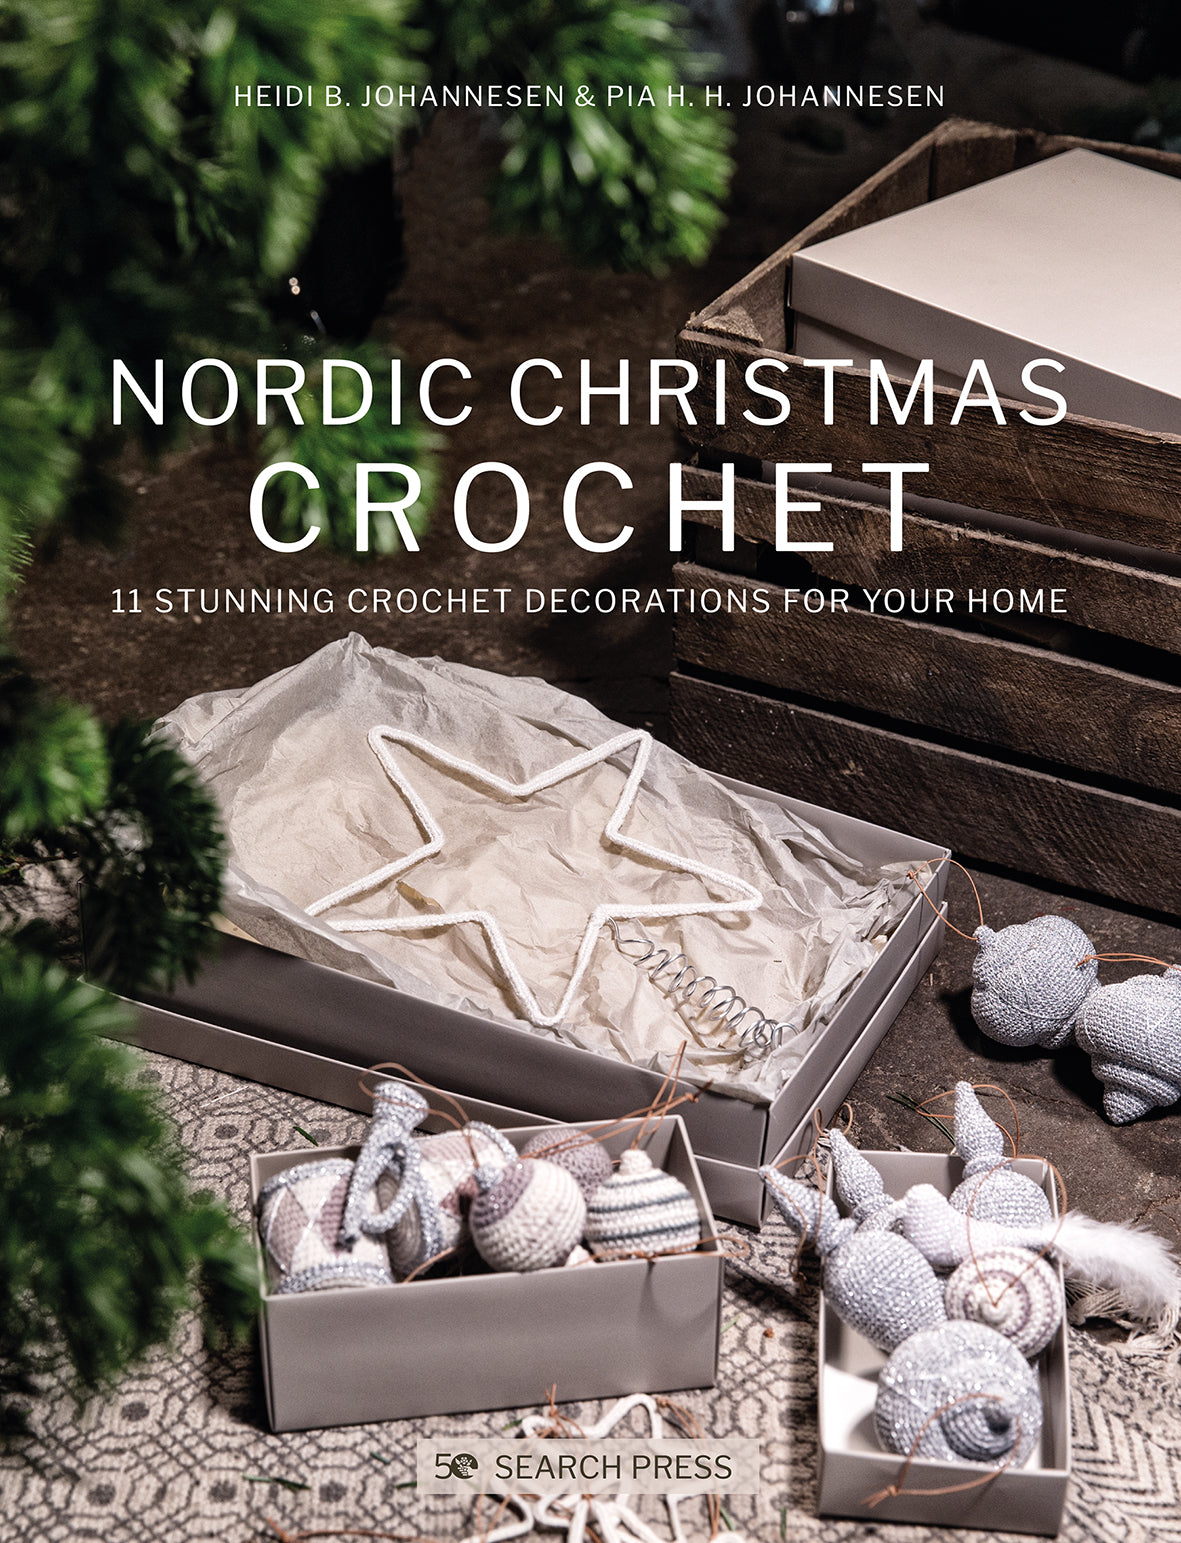 Nordic Christmas Crochet | Heidi B. Johannesburg & Pia H. H. Johannesen